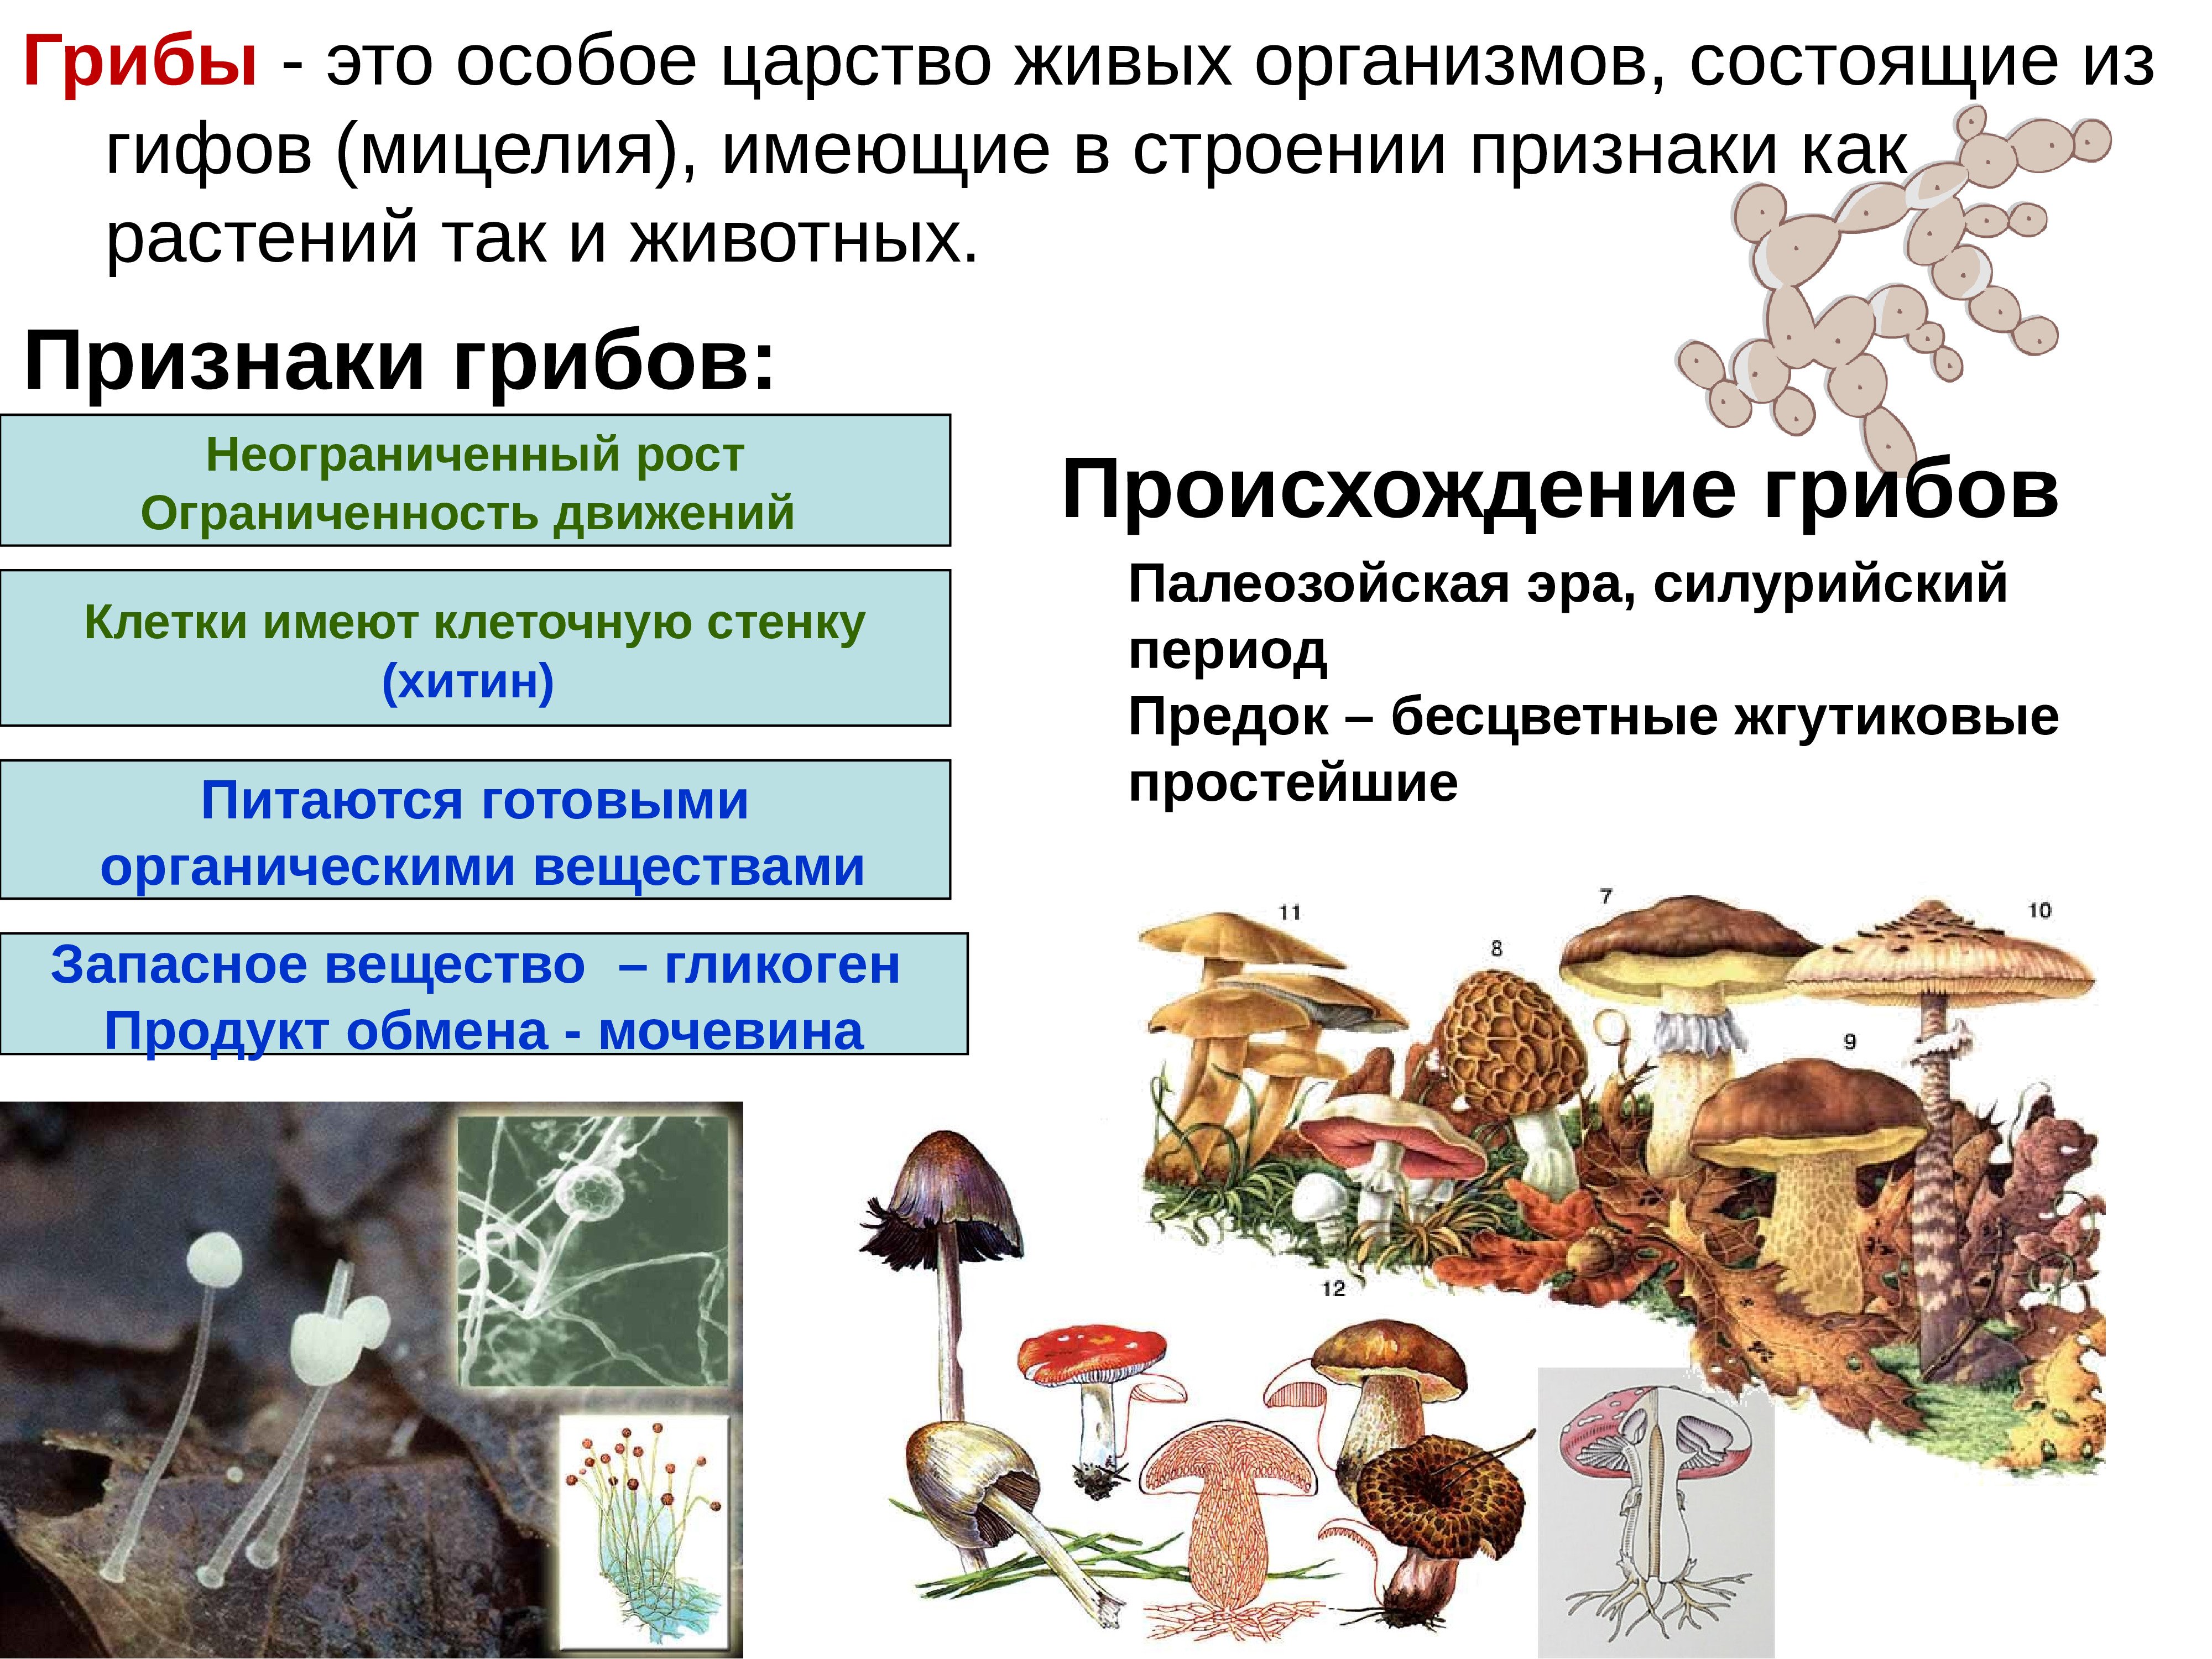 Есть царство грибов. Признаки характерные для царства грибы. Царства живых организмов грибы. Грибы царство грибов. Грибы особое царство живых организмов.